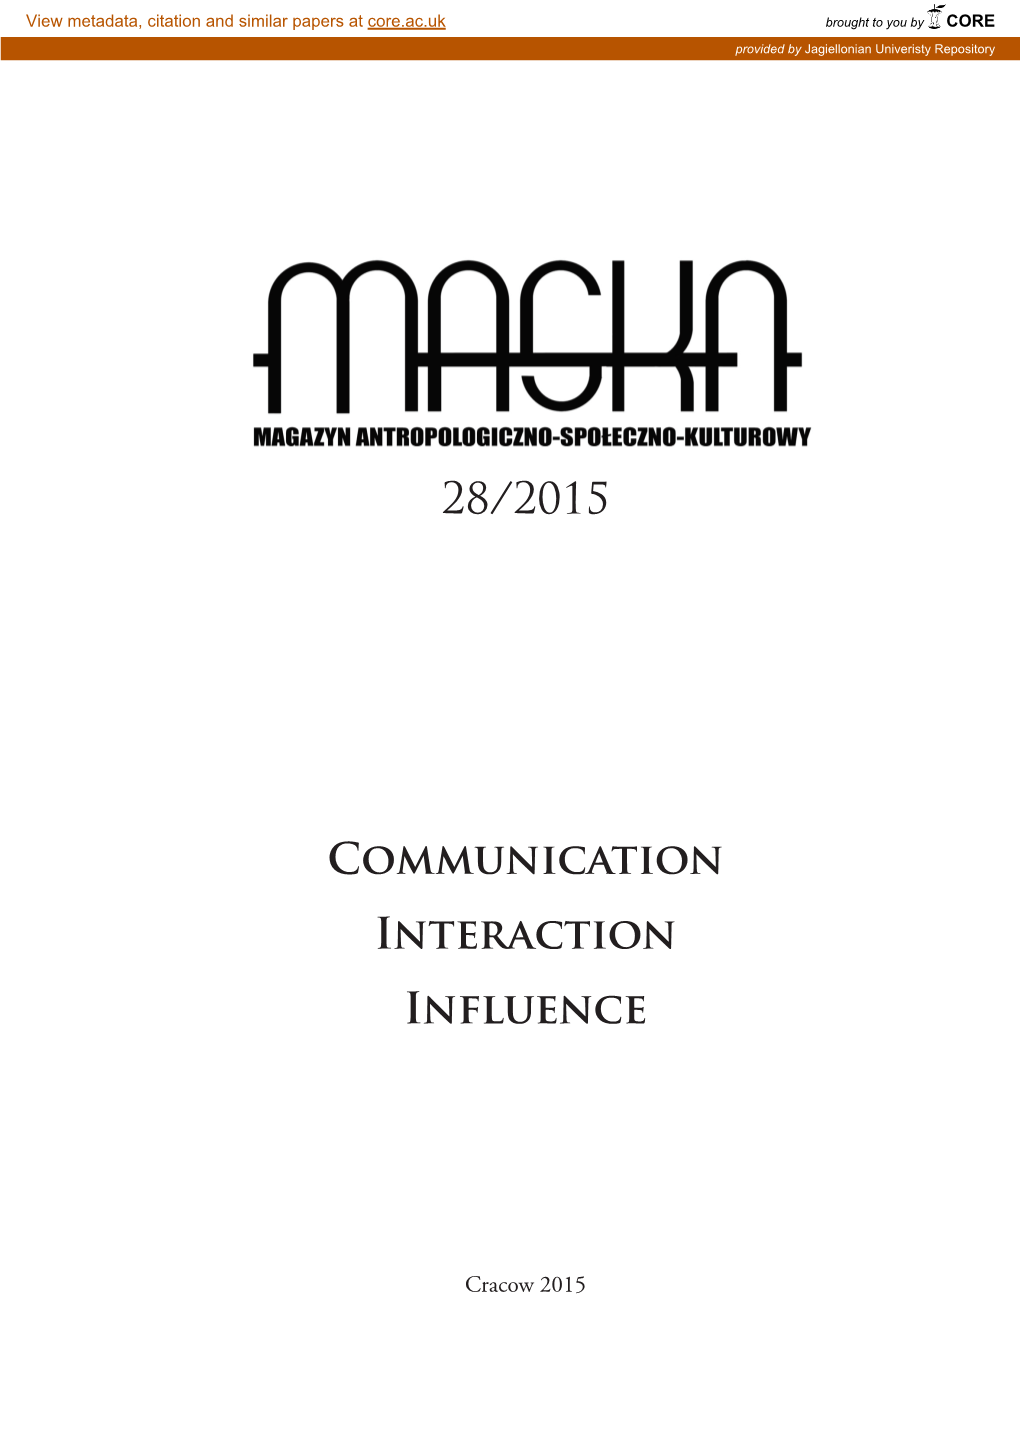 28/2015 Communication Interaction Influence